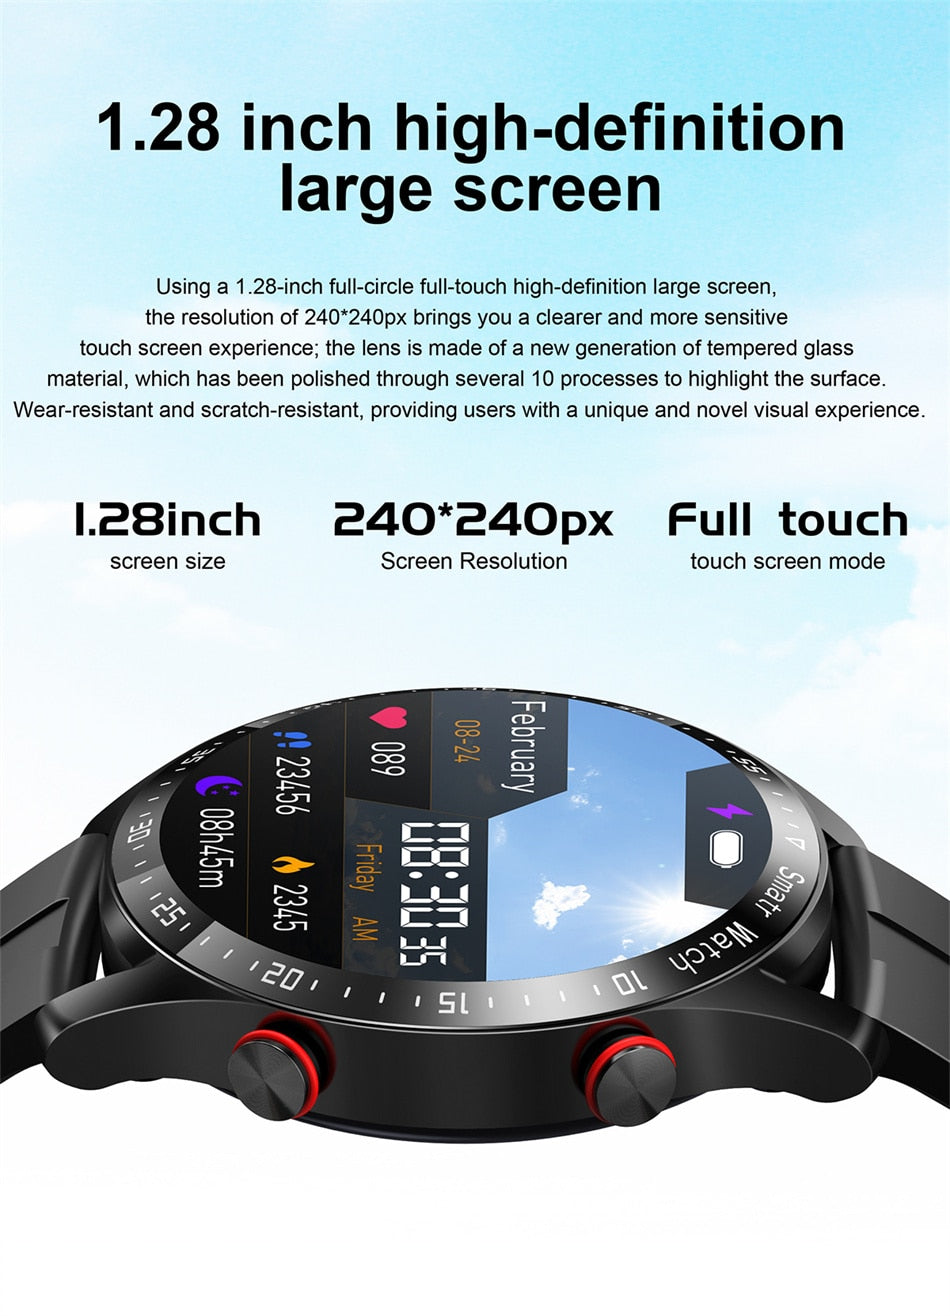 Bluetooth-Smartwatch